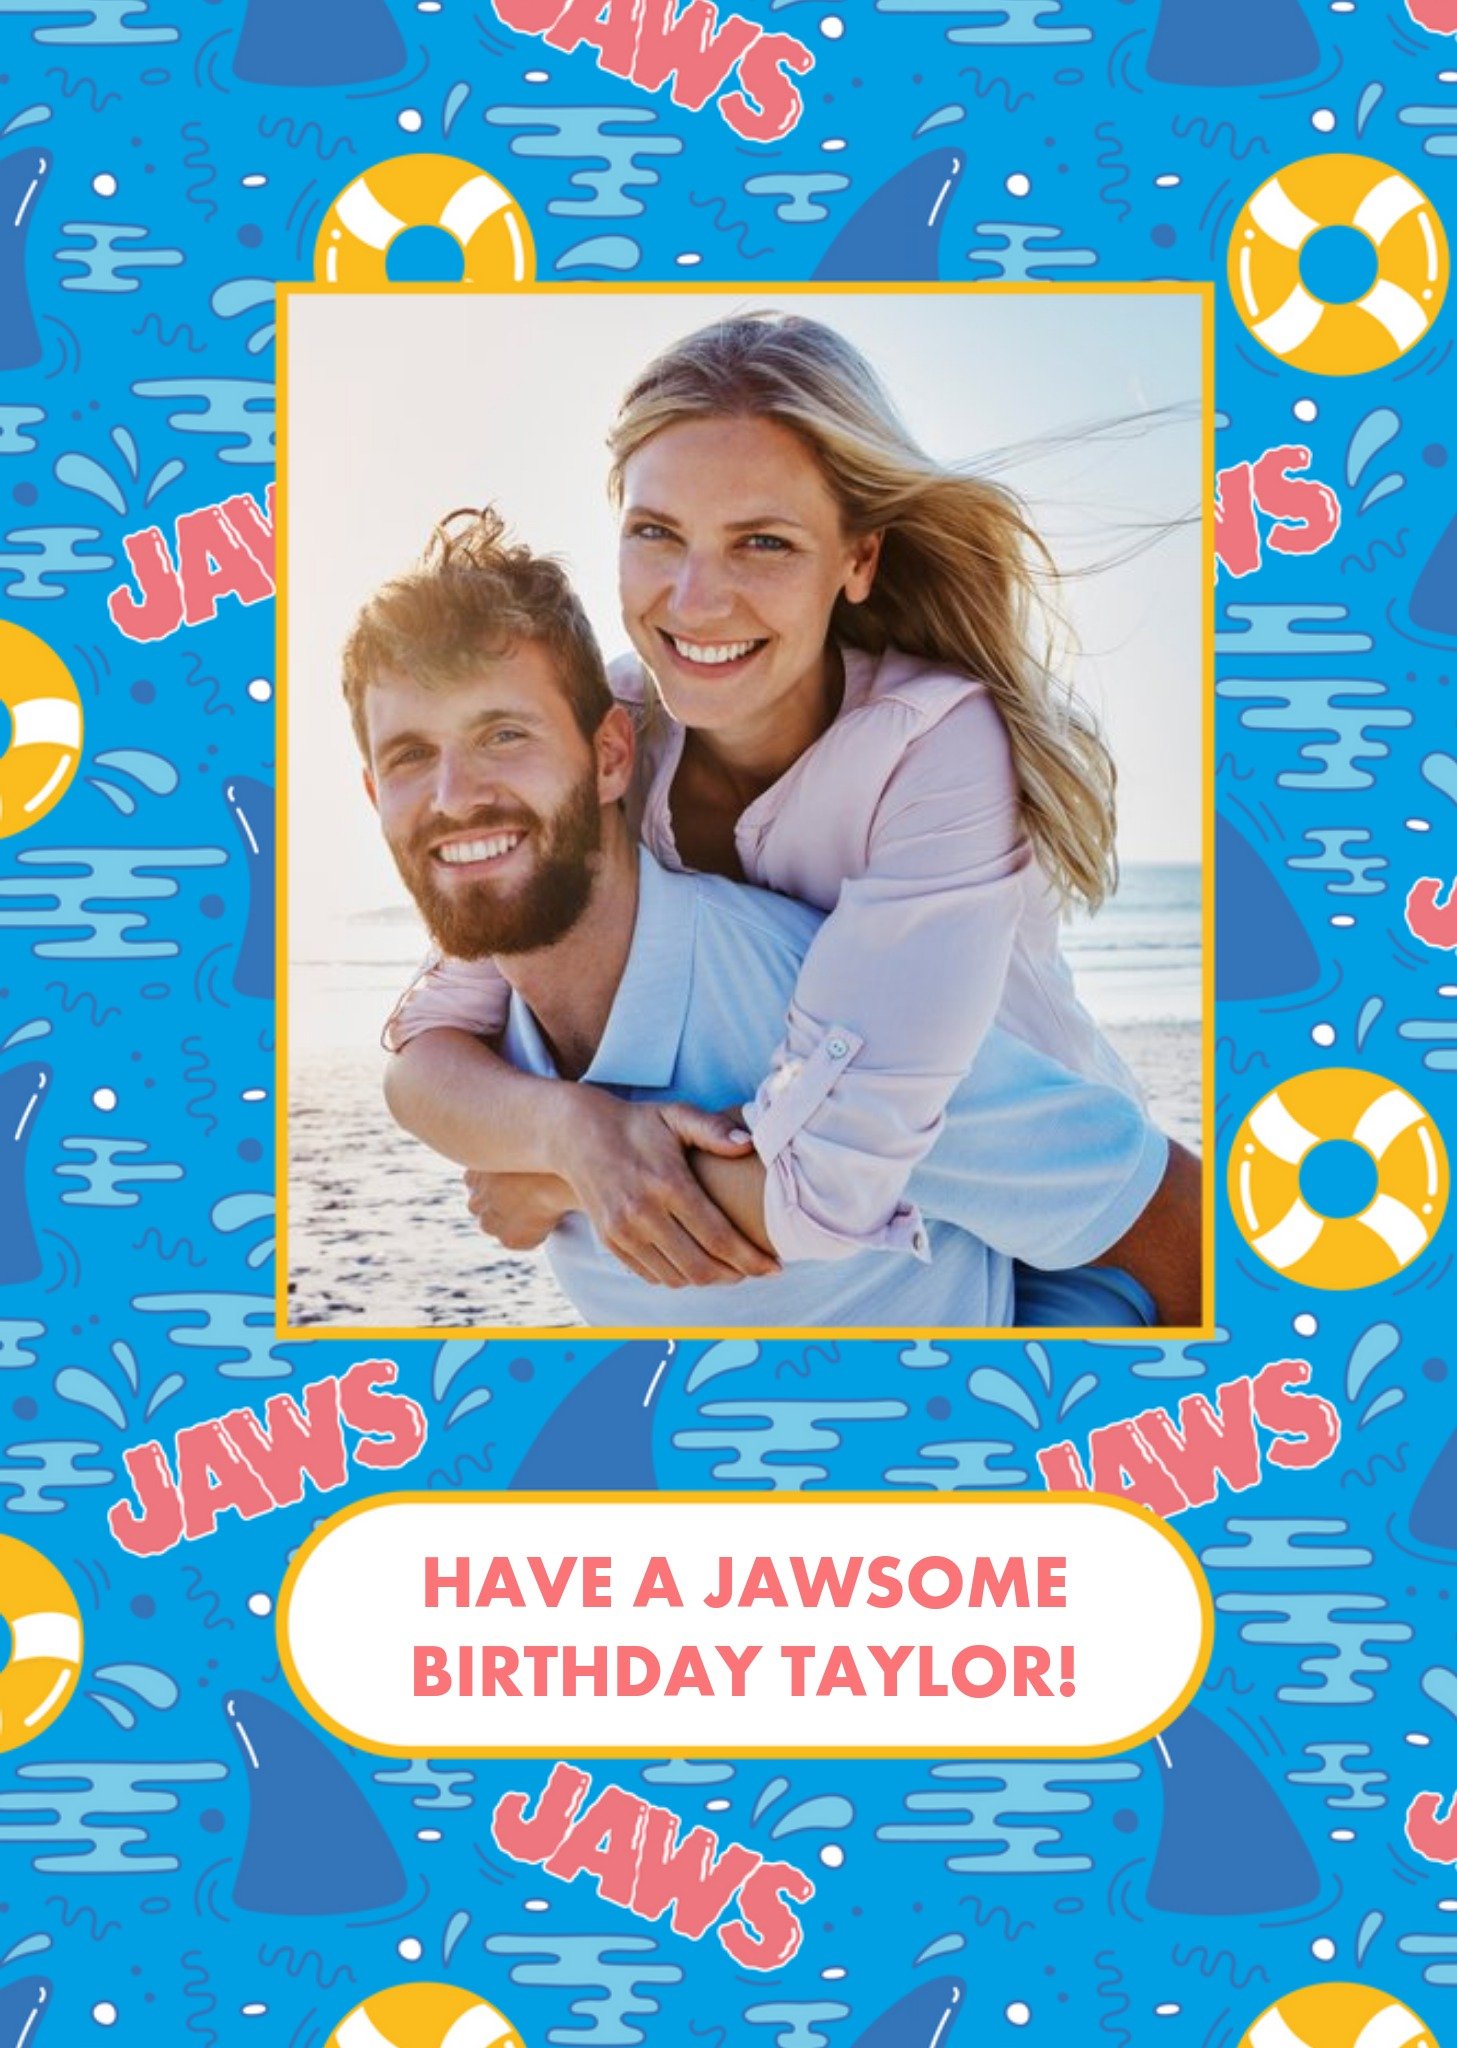 Moonpig Jaws Photo Upload Birthday Card - Universal, Large